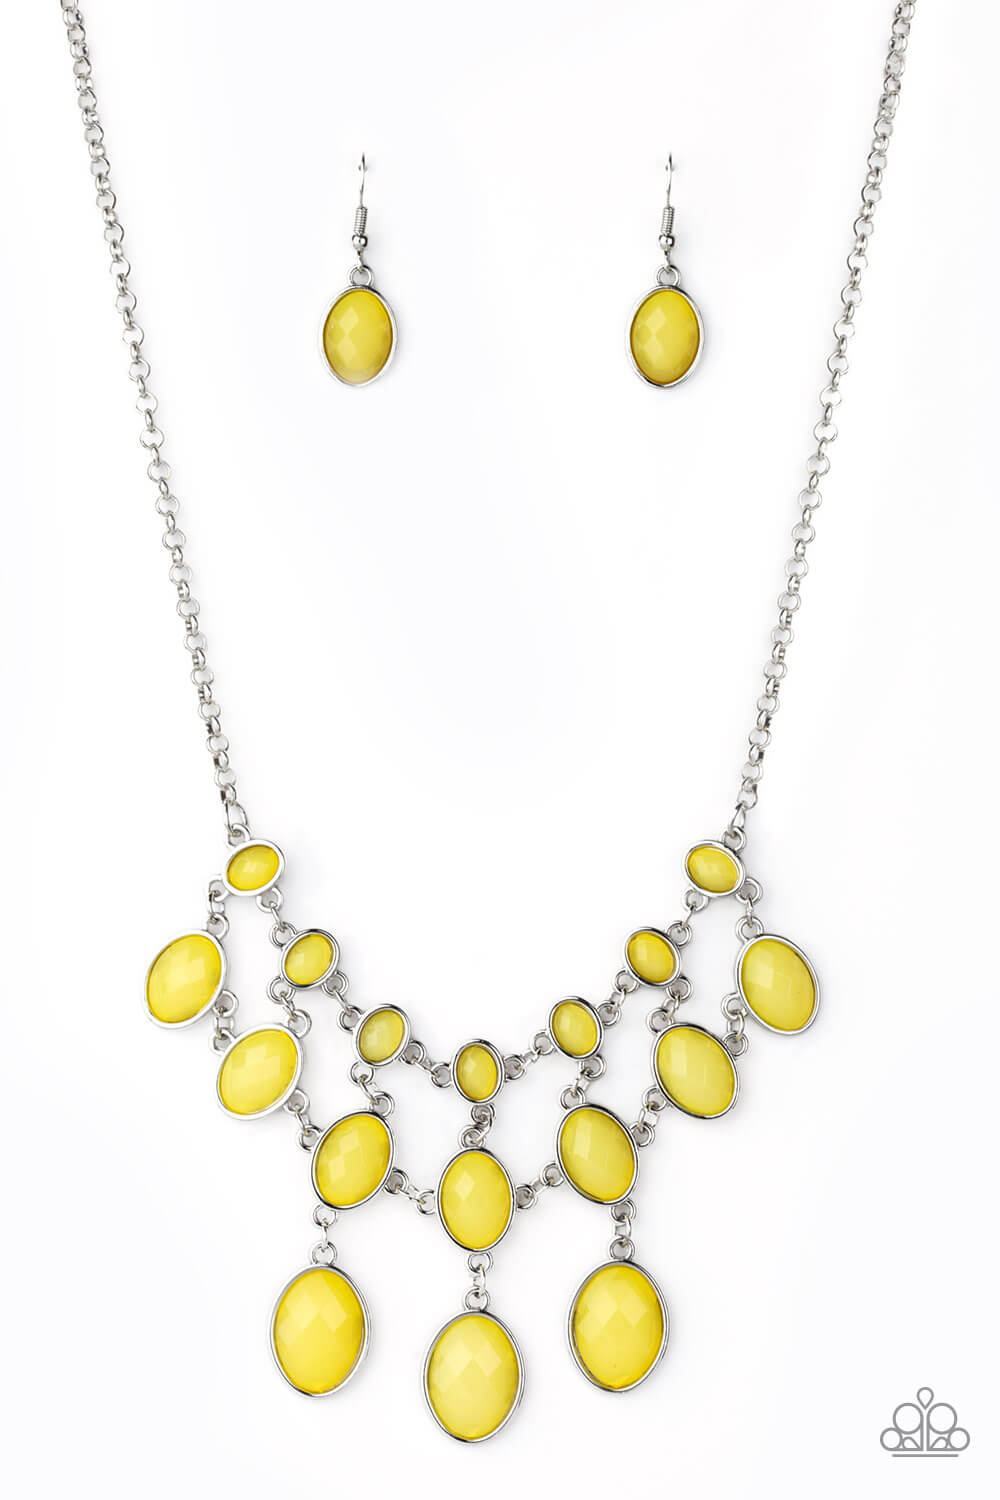 Mermaid Marmalade - Yellow Necklace Set - Princess Glam Shop